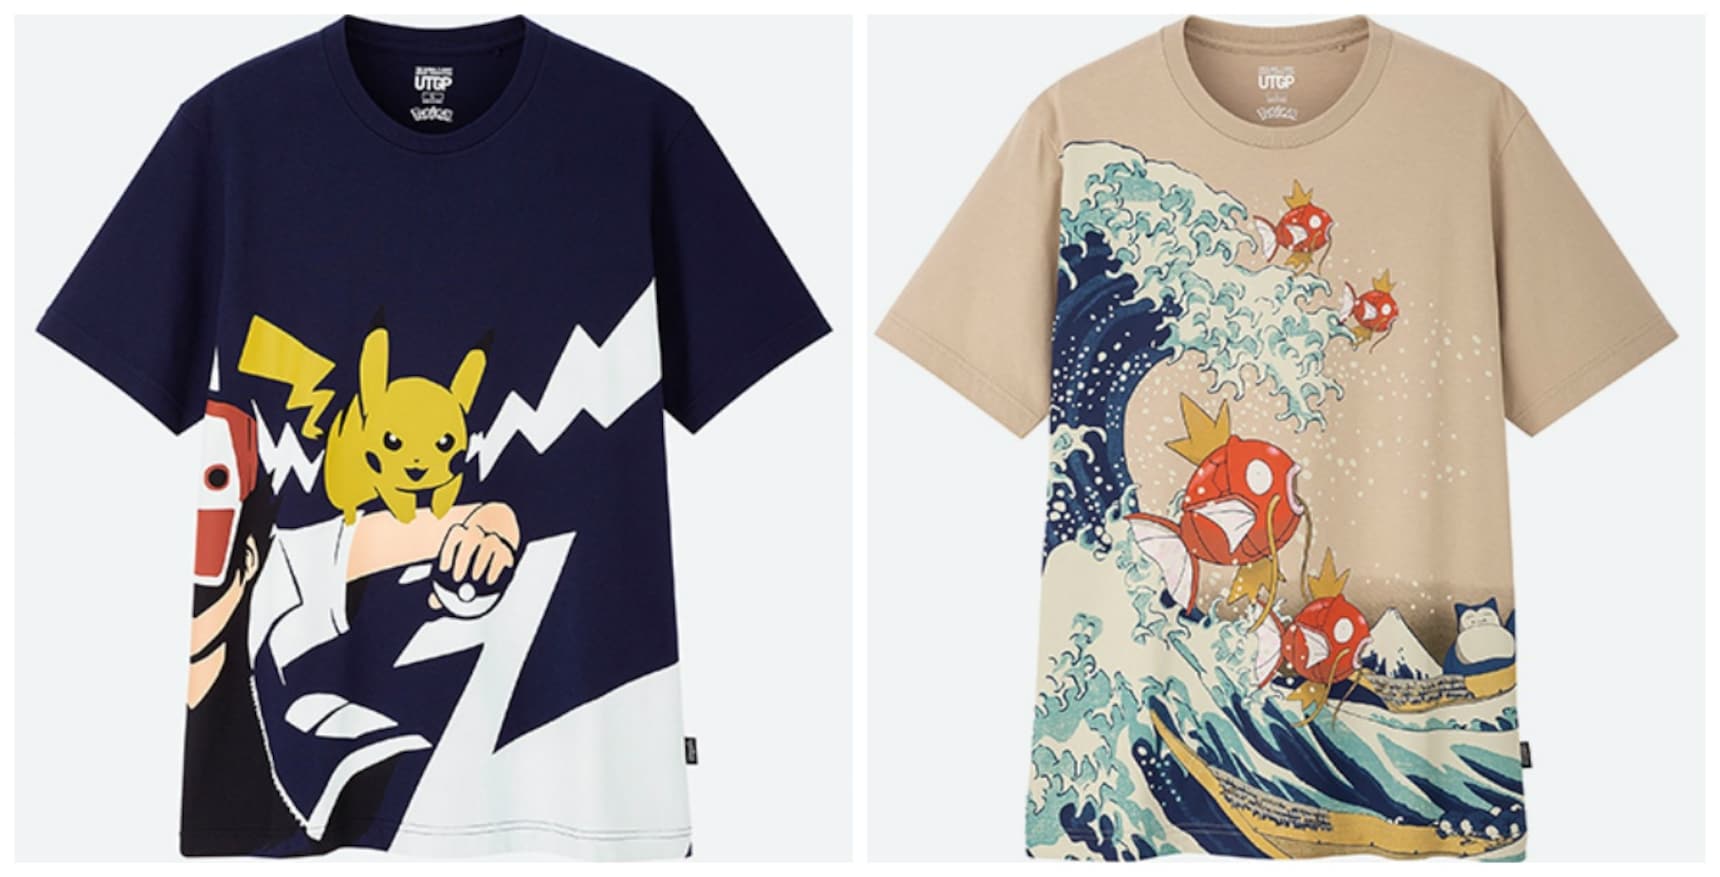 Sala puntada zoo Uniqlo Pokémon T-Shirt Design Winners | All About Japan